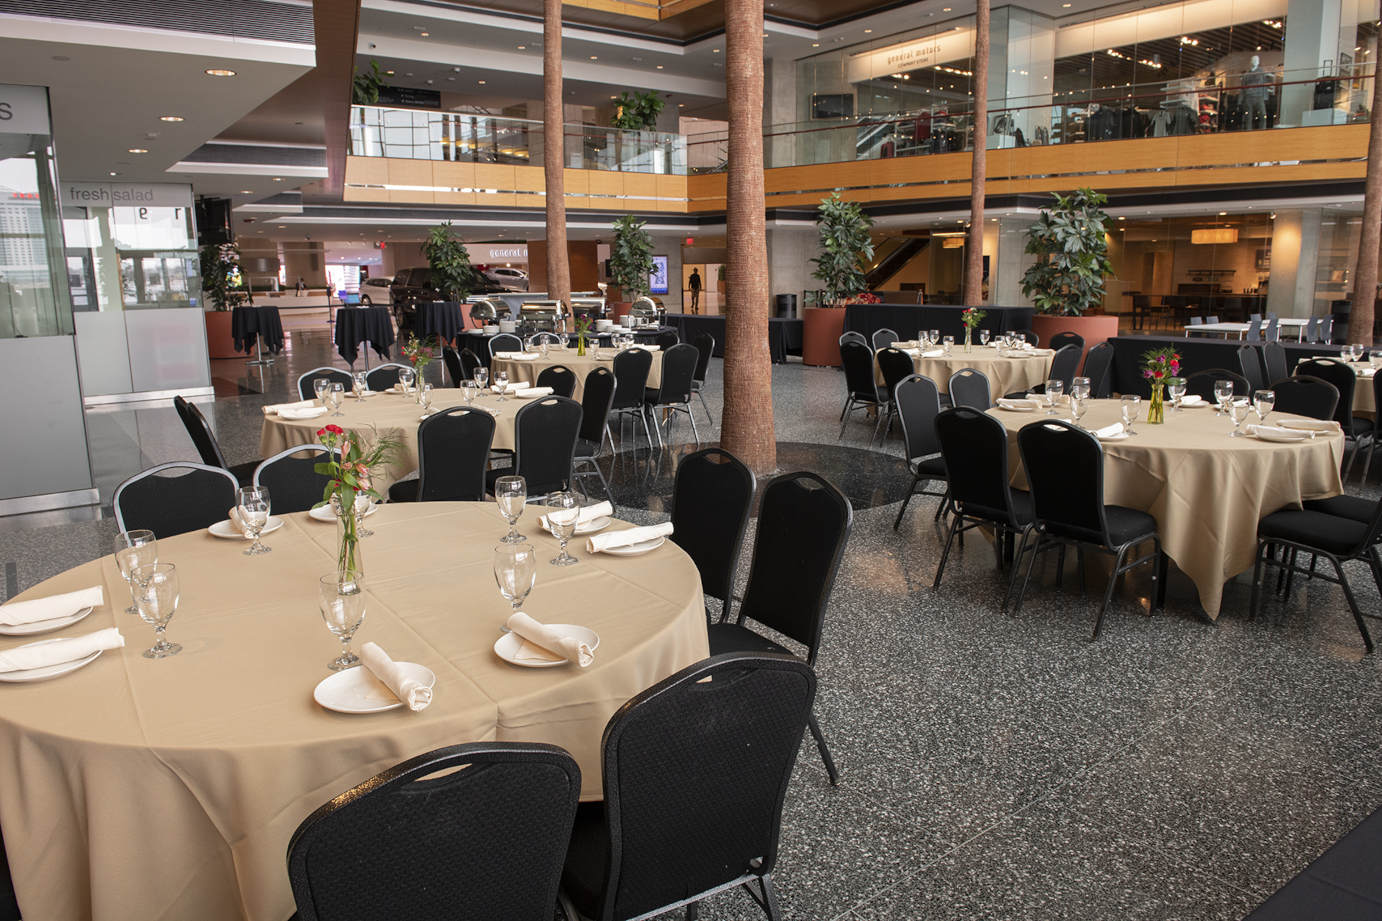 Banquet and Event center interior